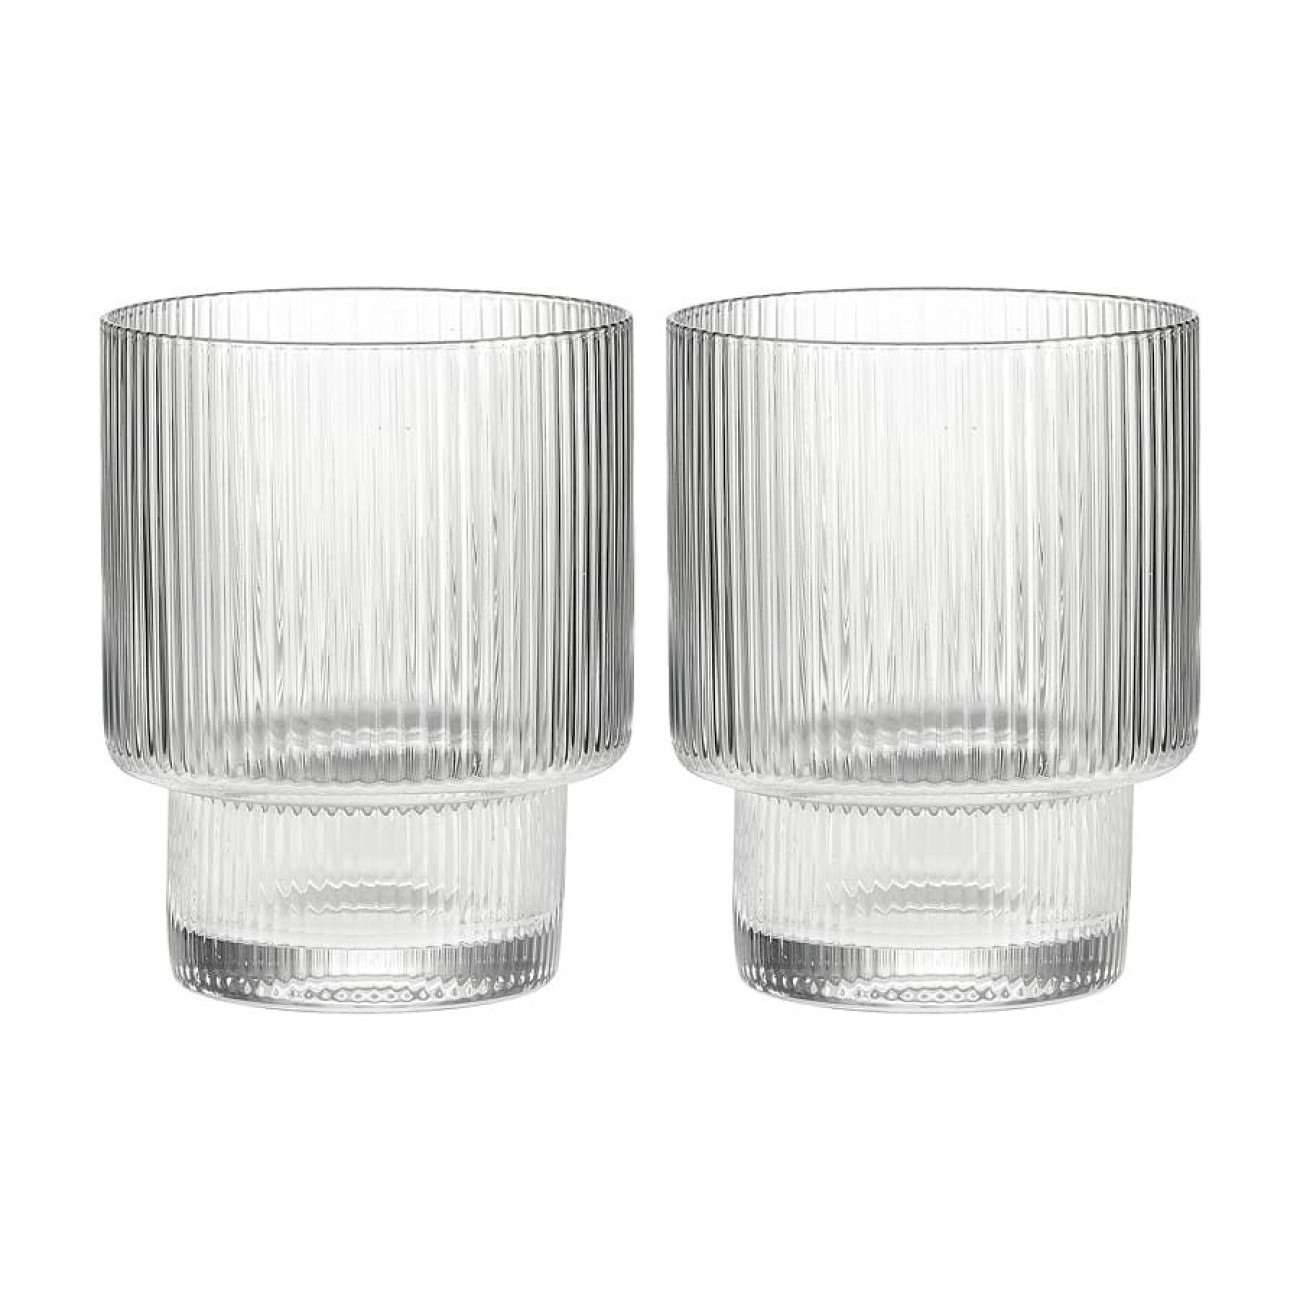 Набор стаканов Pozzi Milano 1876 Modern classic для воды прозрачный 0.32 л 2 предмета набор стаканов maxwell